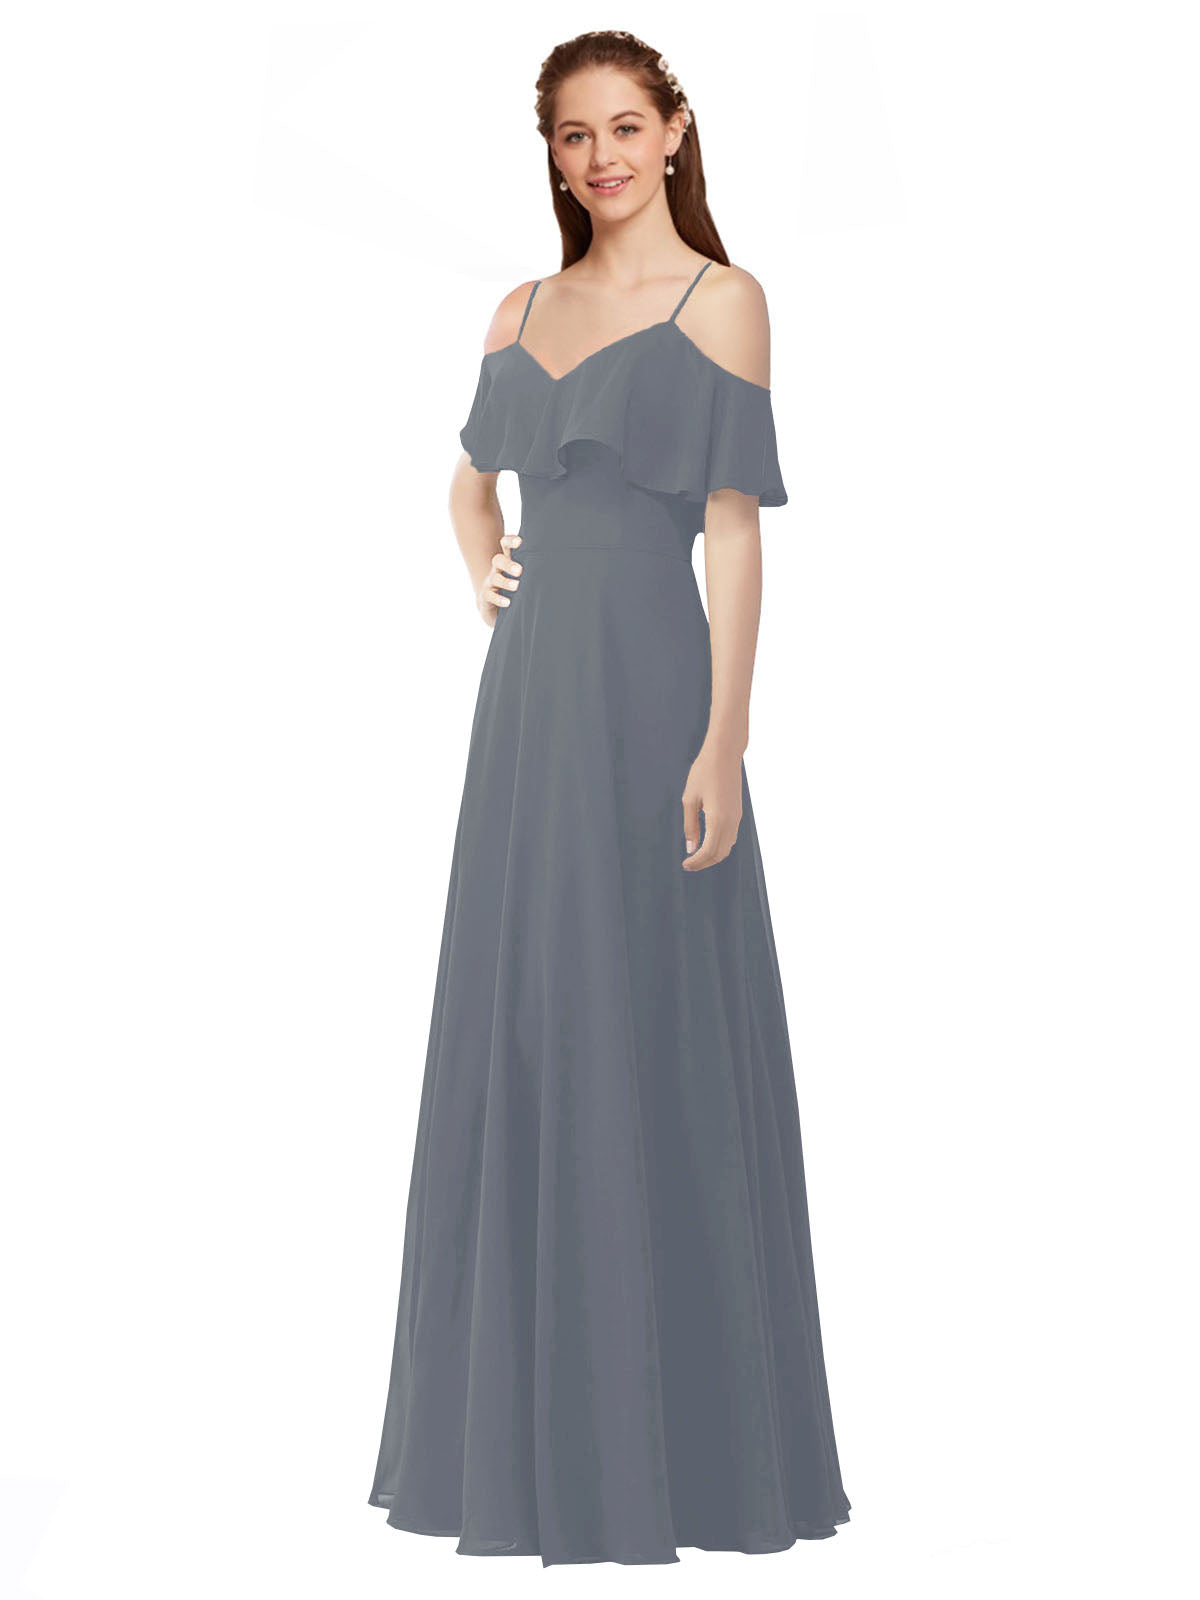 Slate Grey A-Line Off the Shoulder V-Neck Sleeveless Long Bridesmaid Dress Marianna